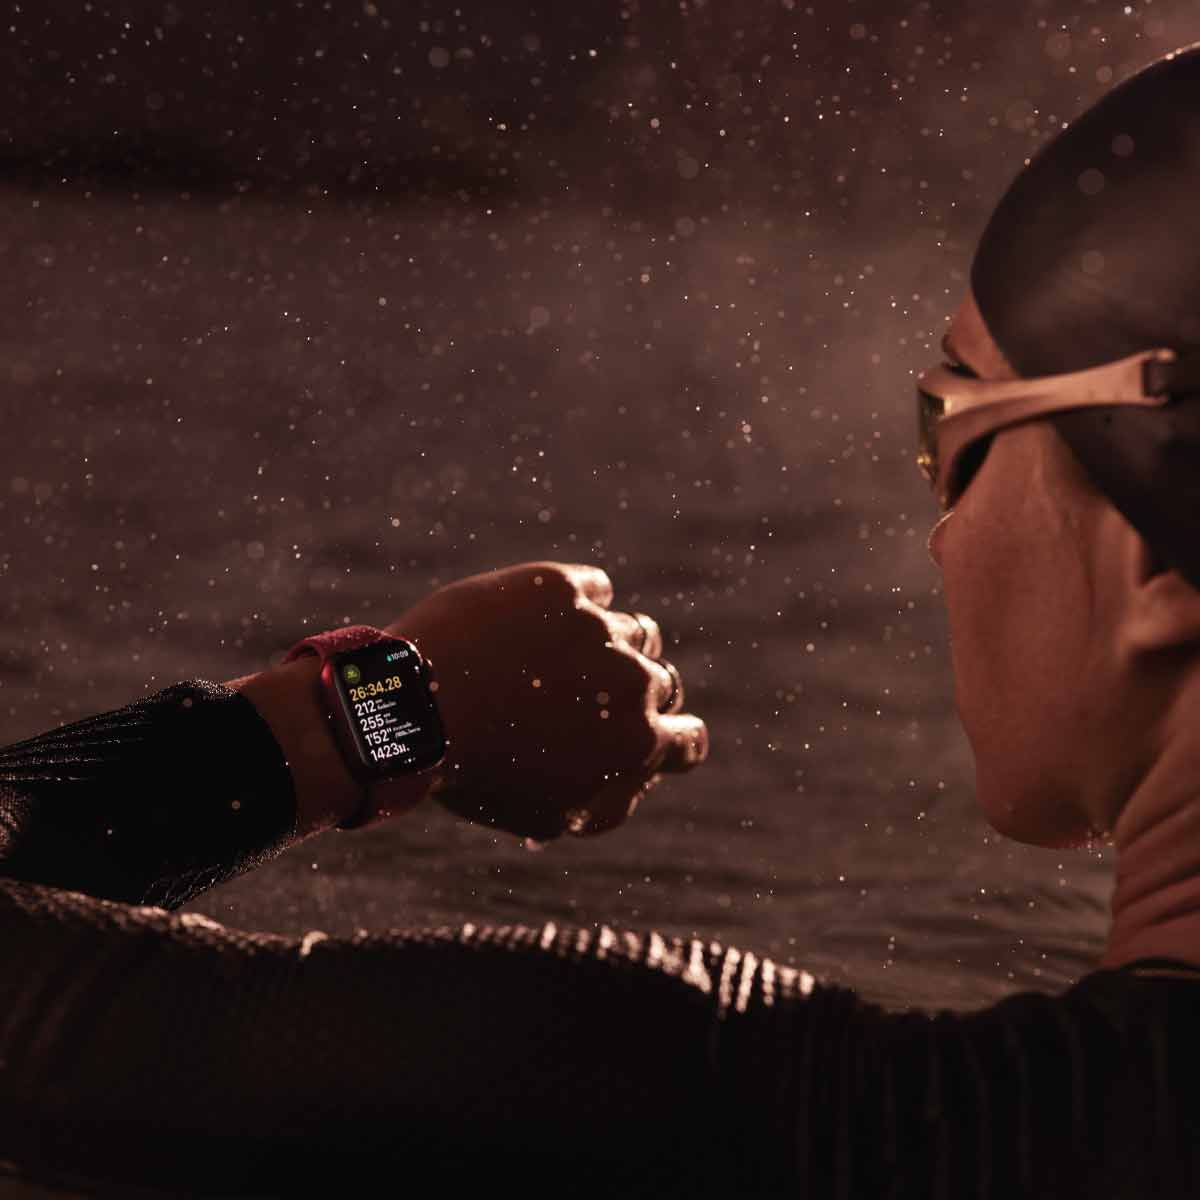 Apple Watch Series 9 ตัวเรือนอะลูมิเนียม สี Pink ขนาด 45มม. รุ่น GPS สายแบบ Sport Loop